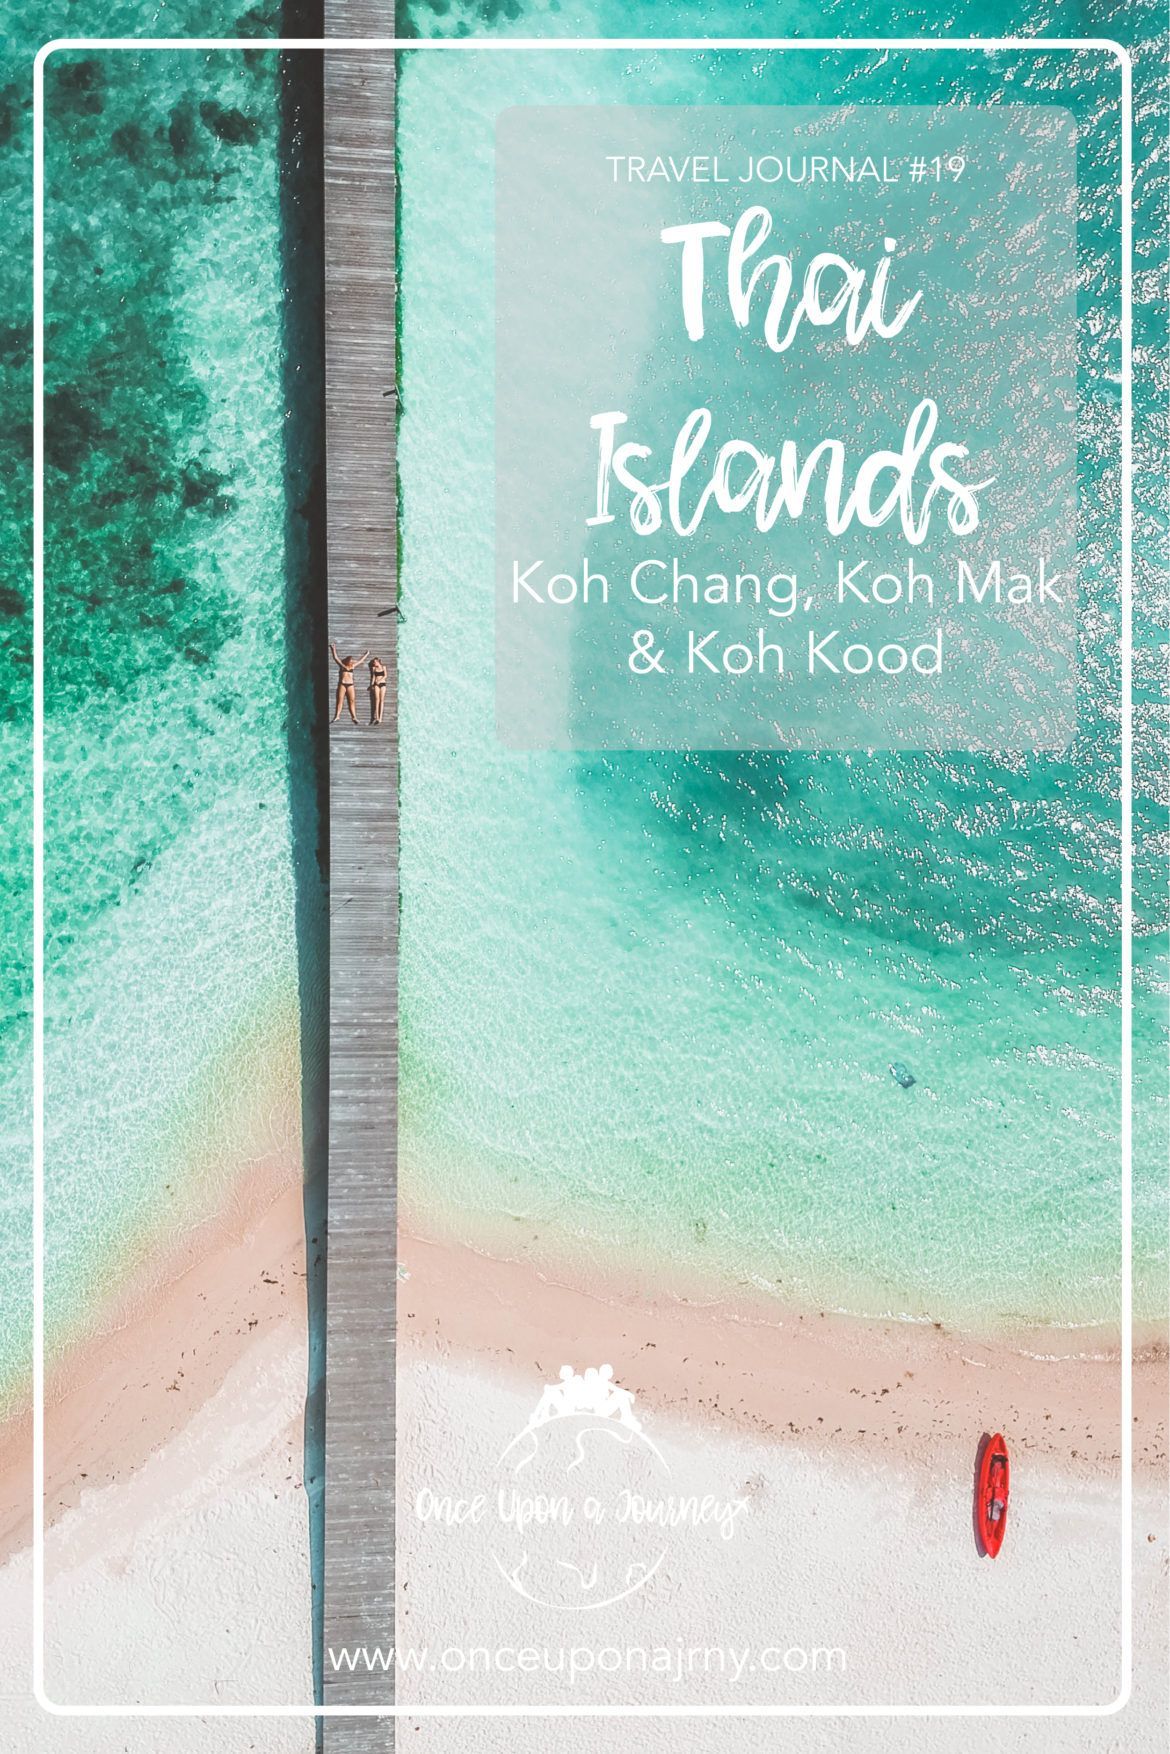 Travel Journal Thai Islands: Koh Chang, Koh Mak & Koh Kood -   18 travel destinations Thailand beaches ideas